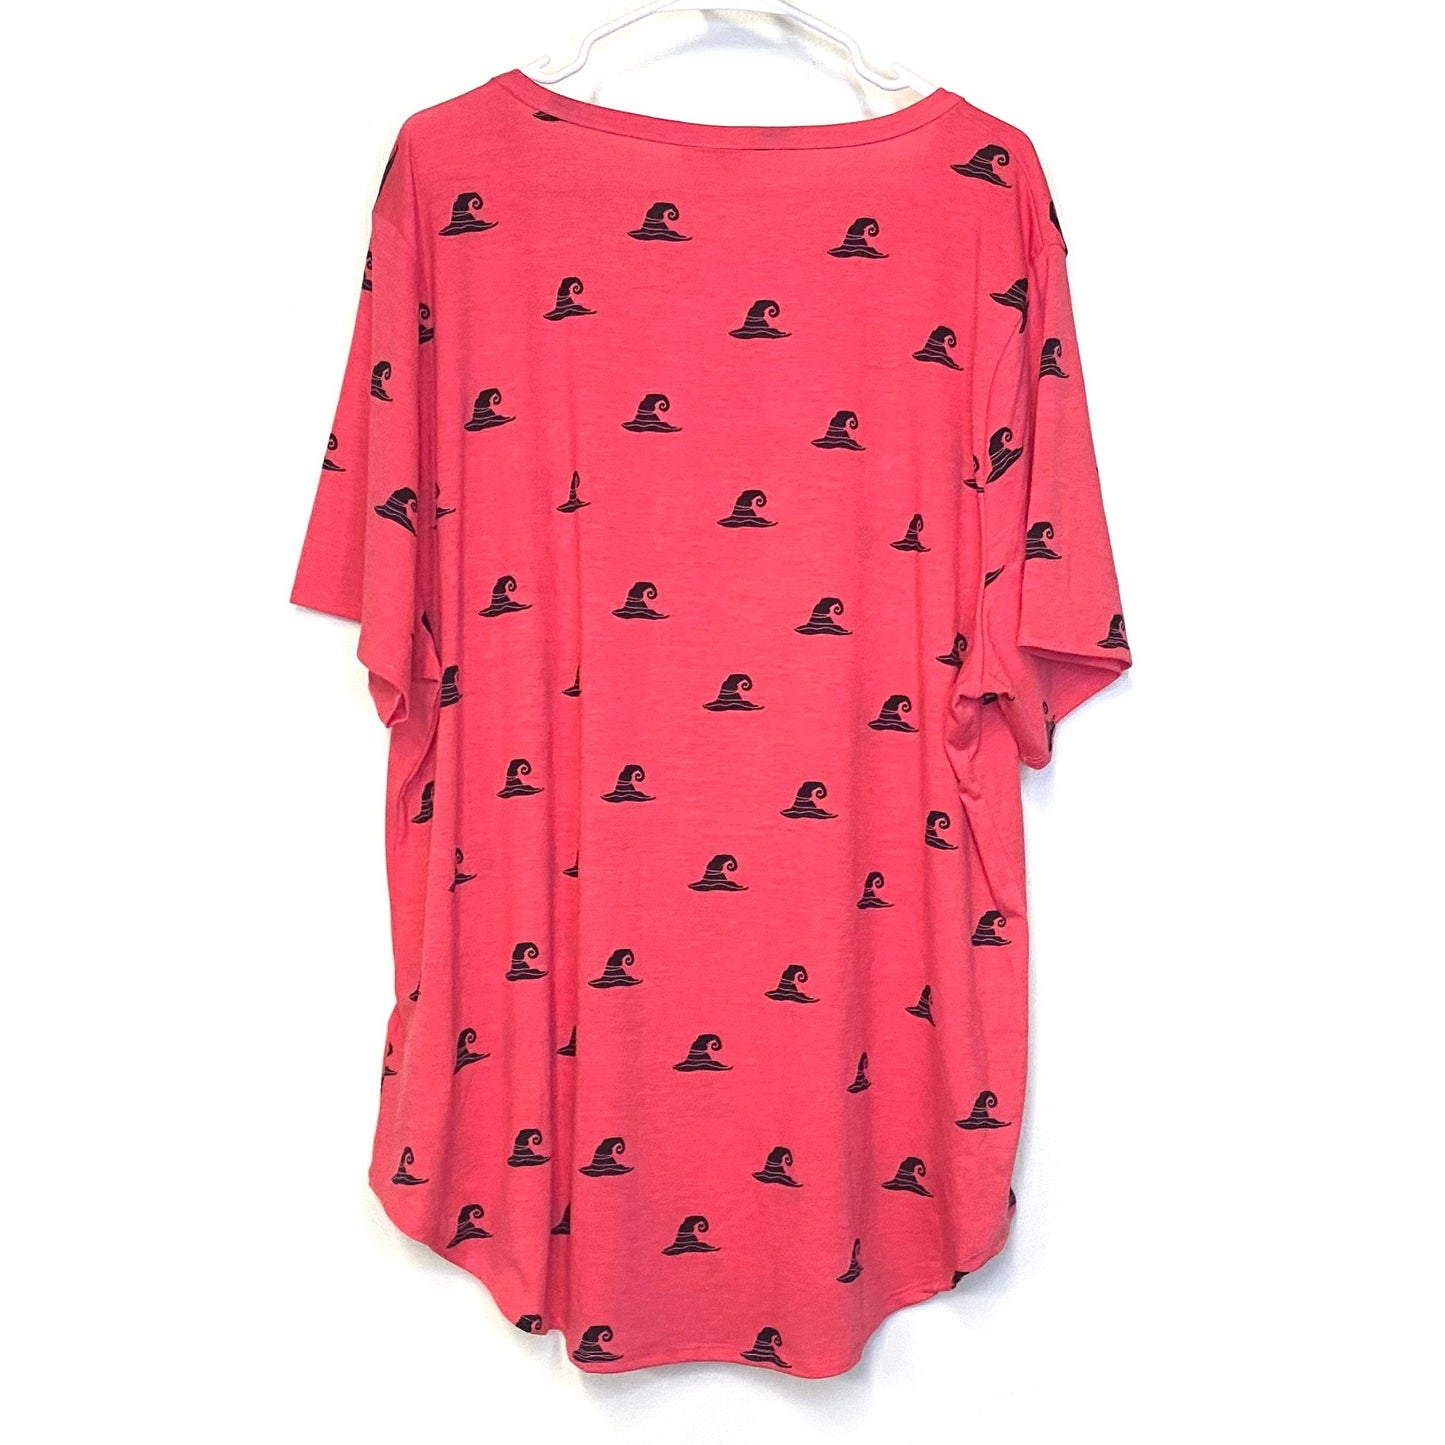 LuLaRoe Womens Size 2XL Witch's Hat Pink/Black Iris Graphic T-Shirt Shirt S/s NWT